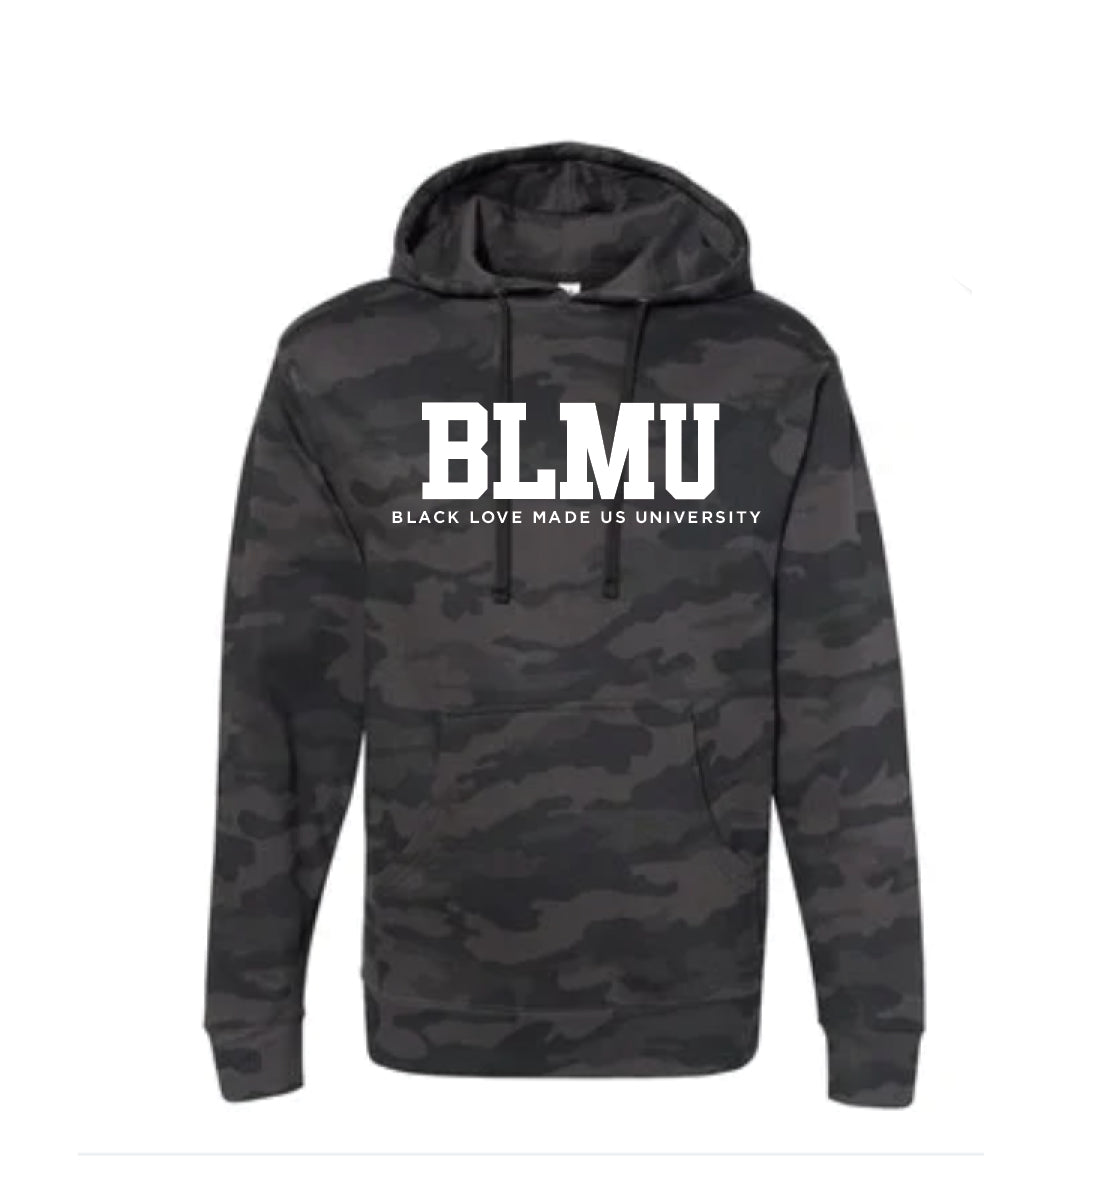 BLMU University